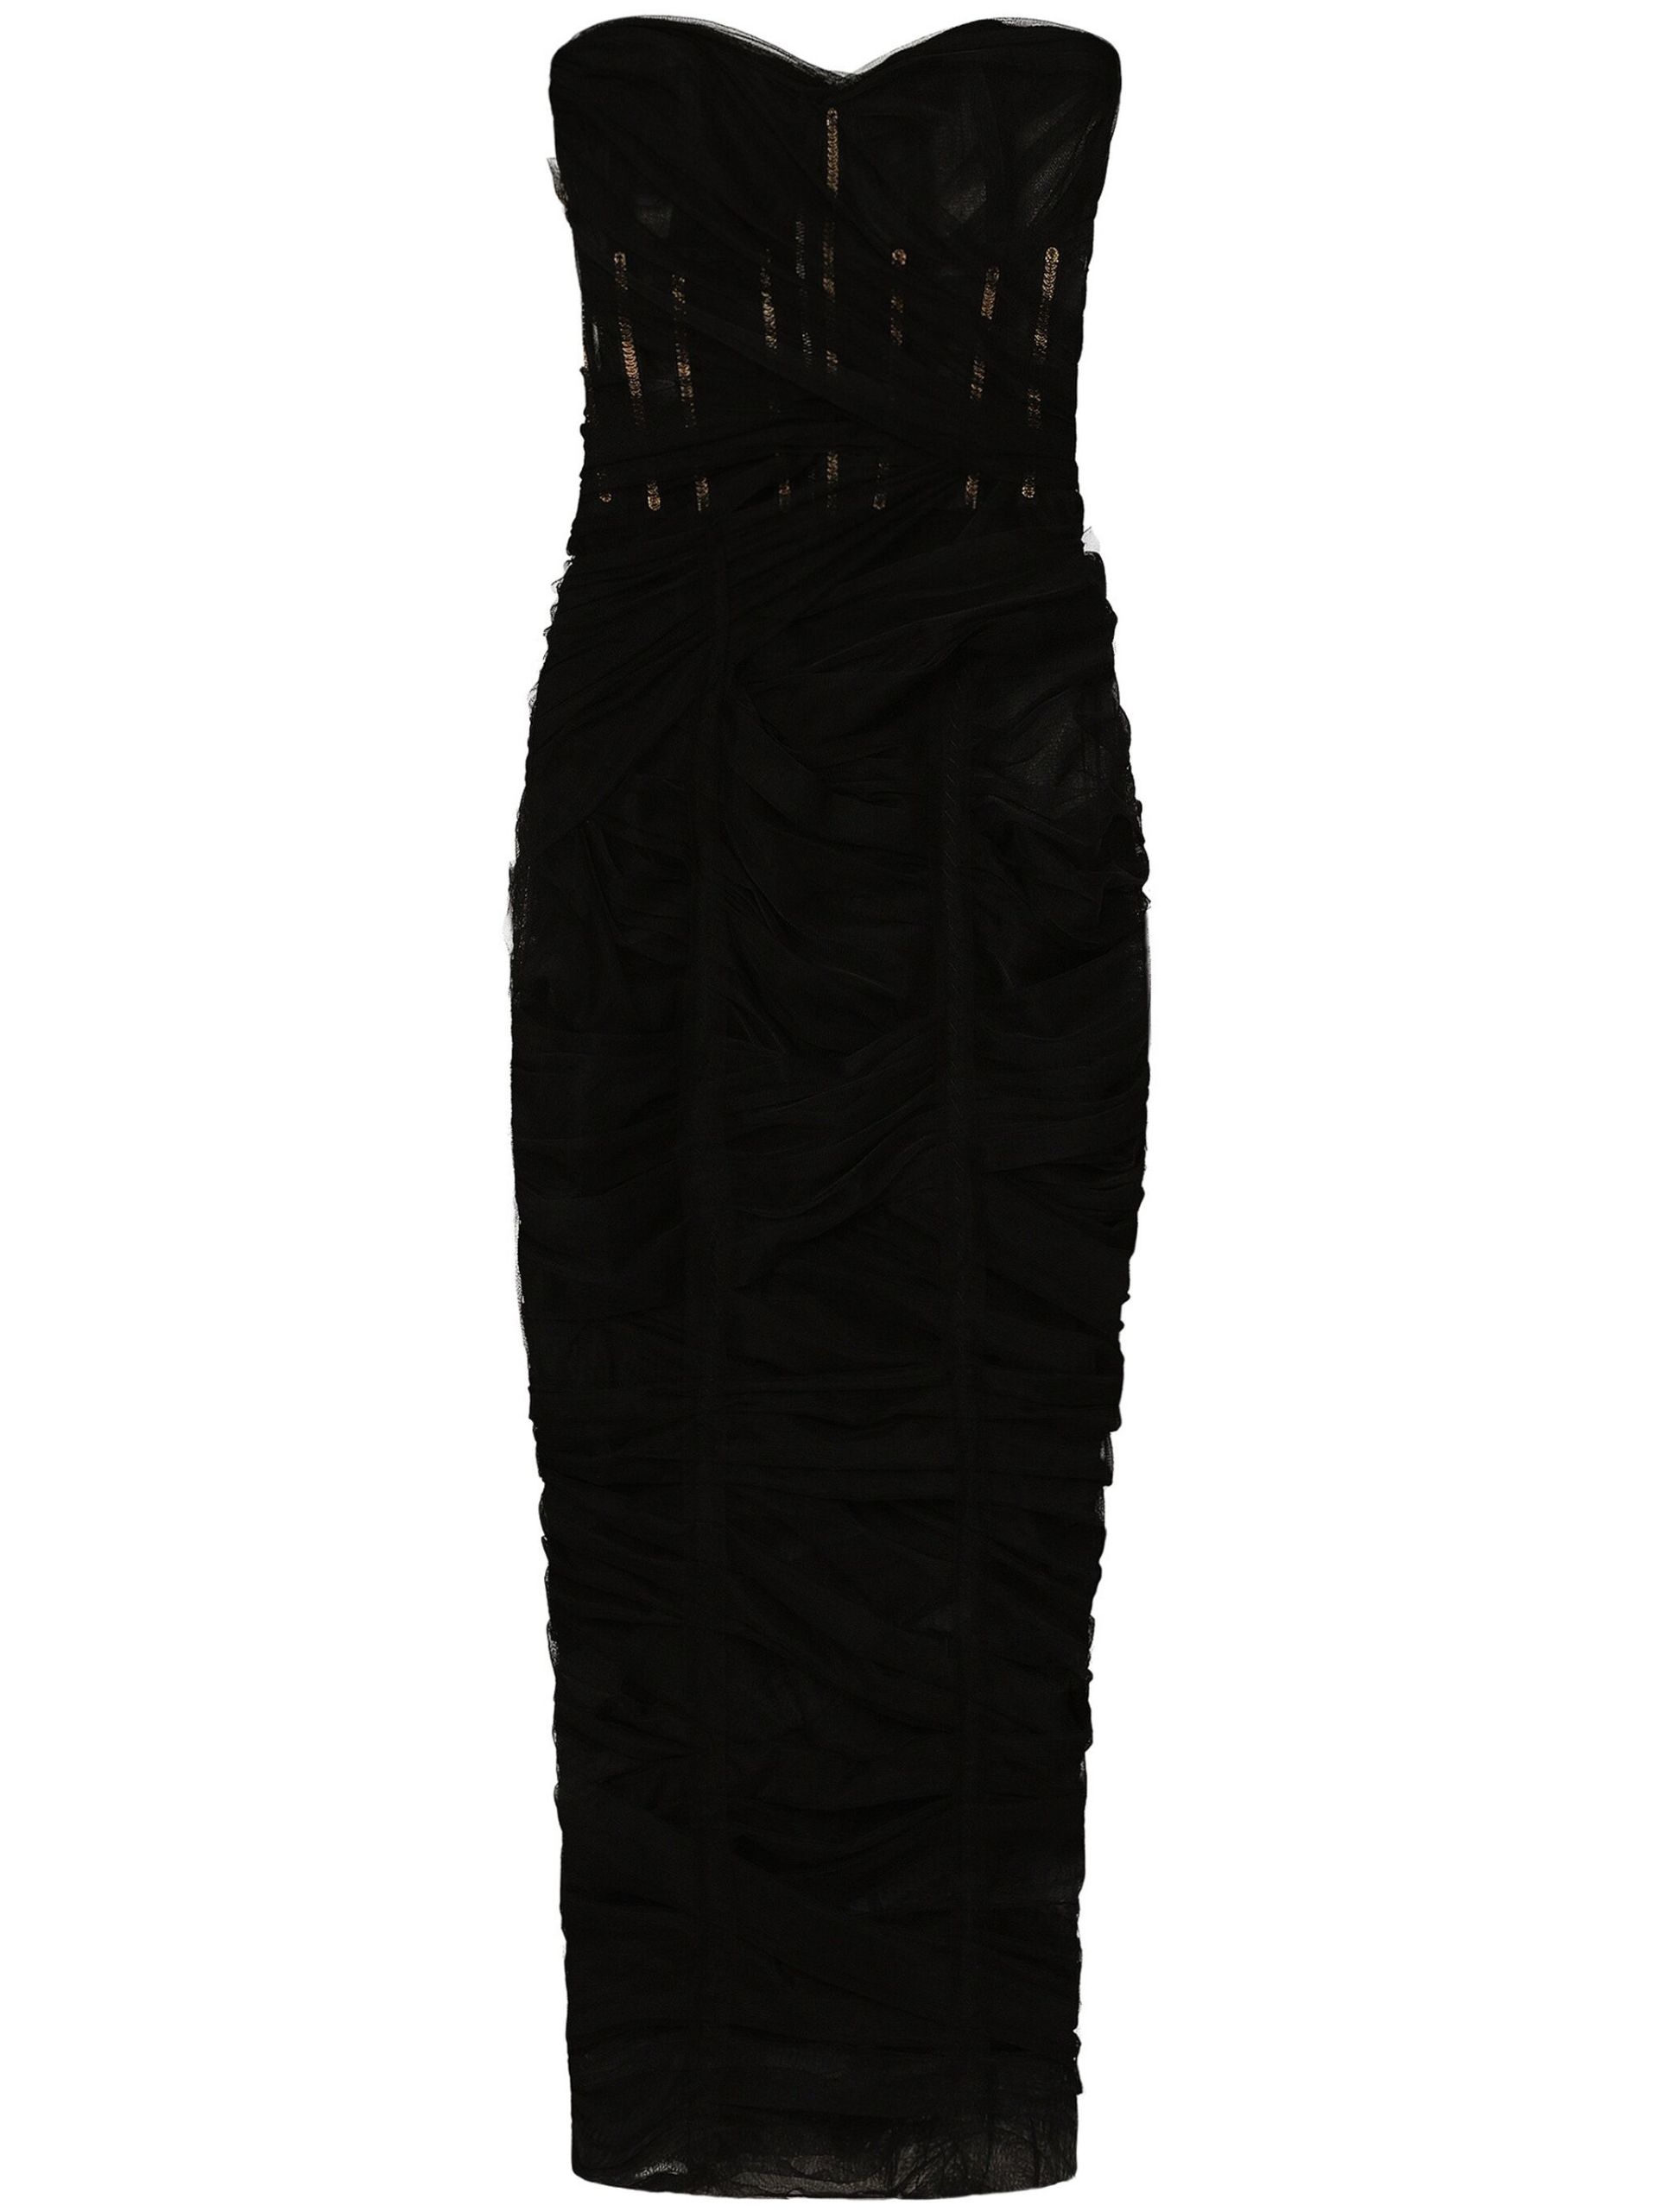 Black Tulle Corset Dress - 1